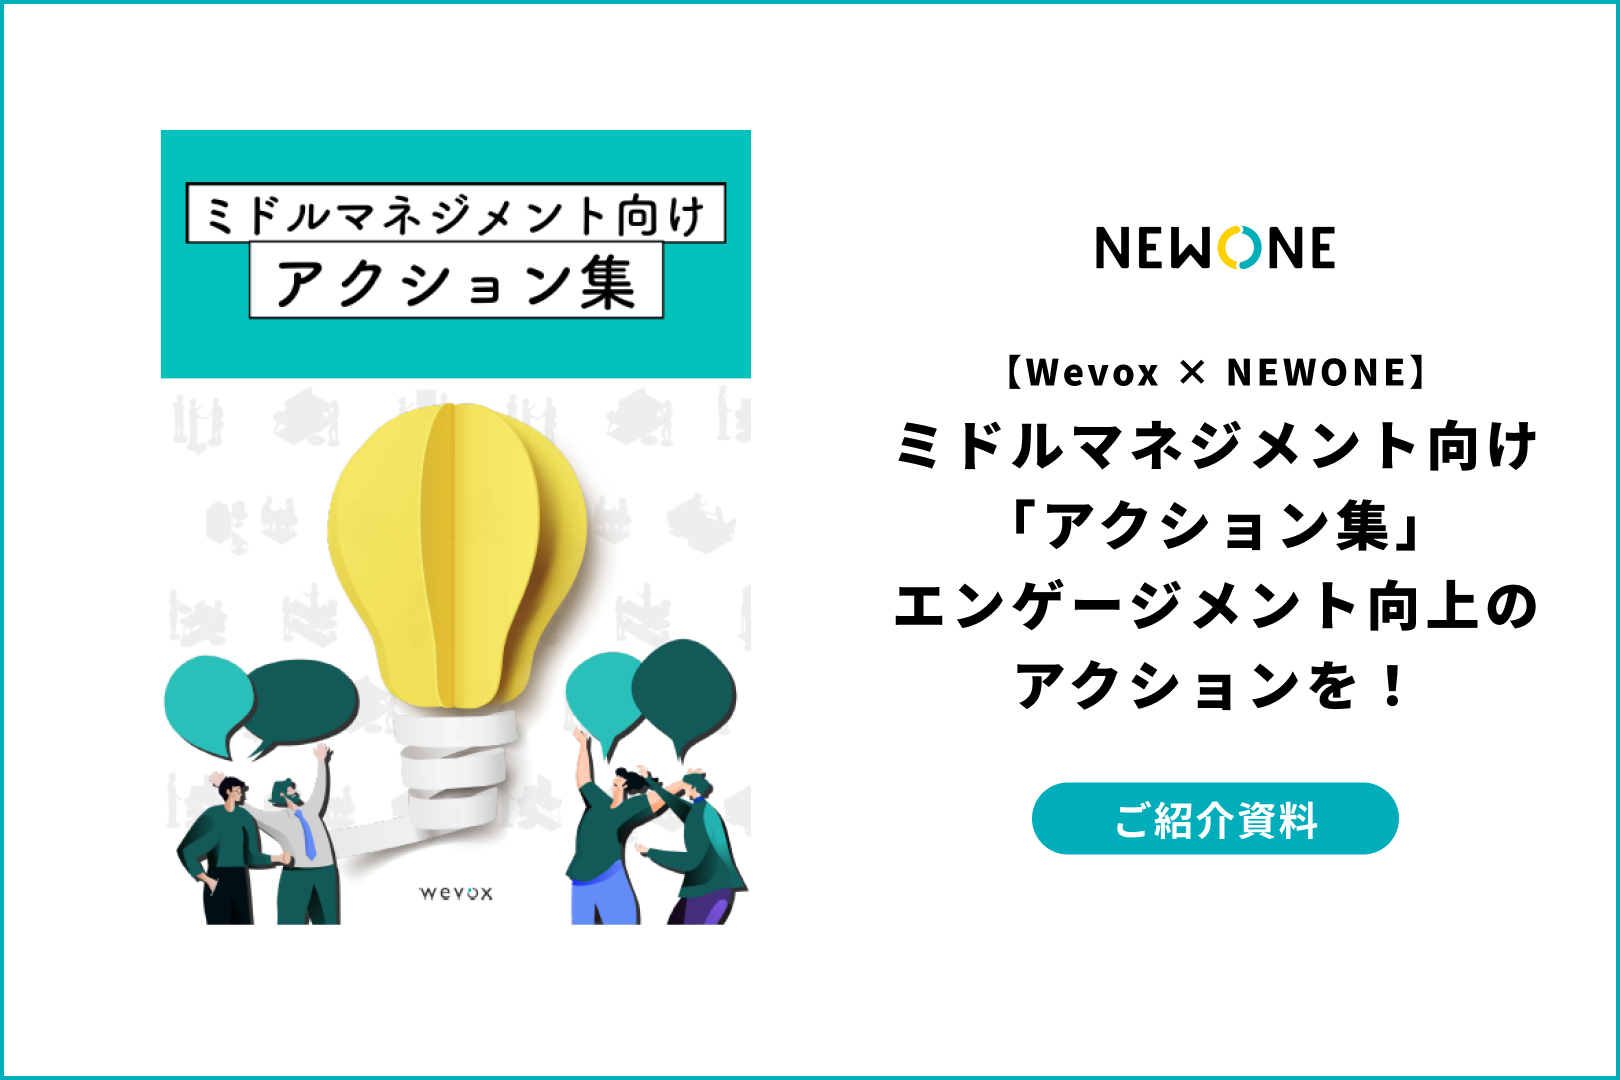 【Wevox × NEWONE】ミドルマネジメント向け「アクション集」～エンゲージメント向上のアクションを！～